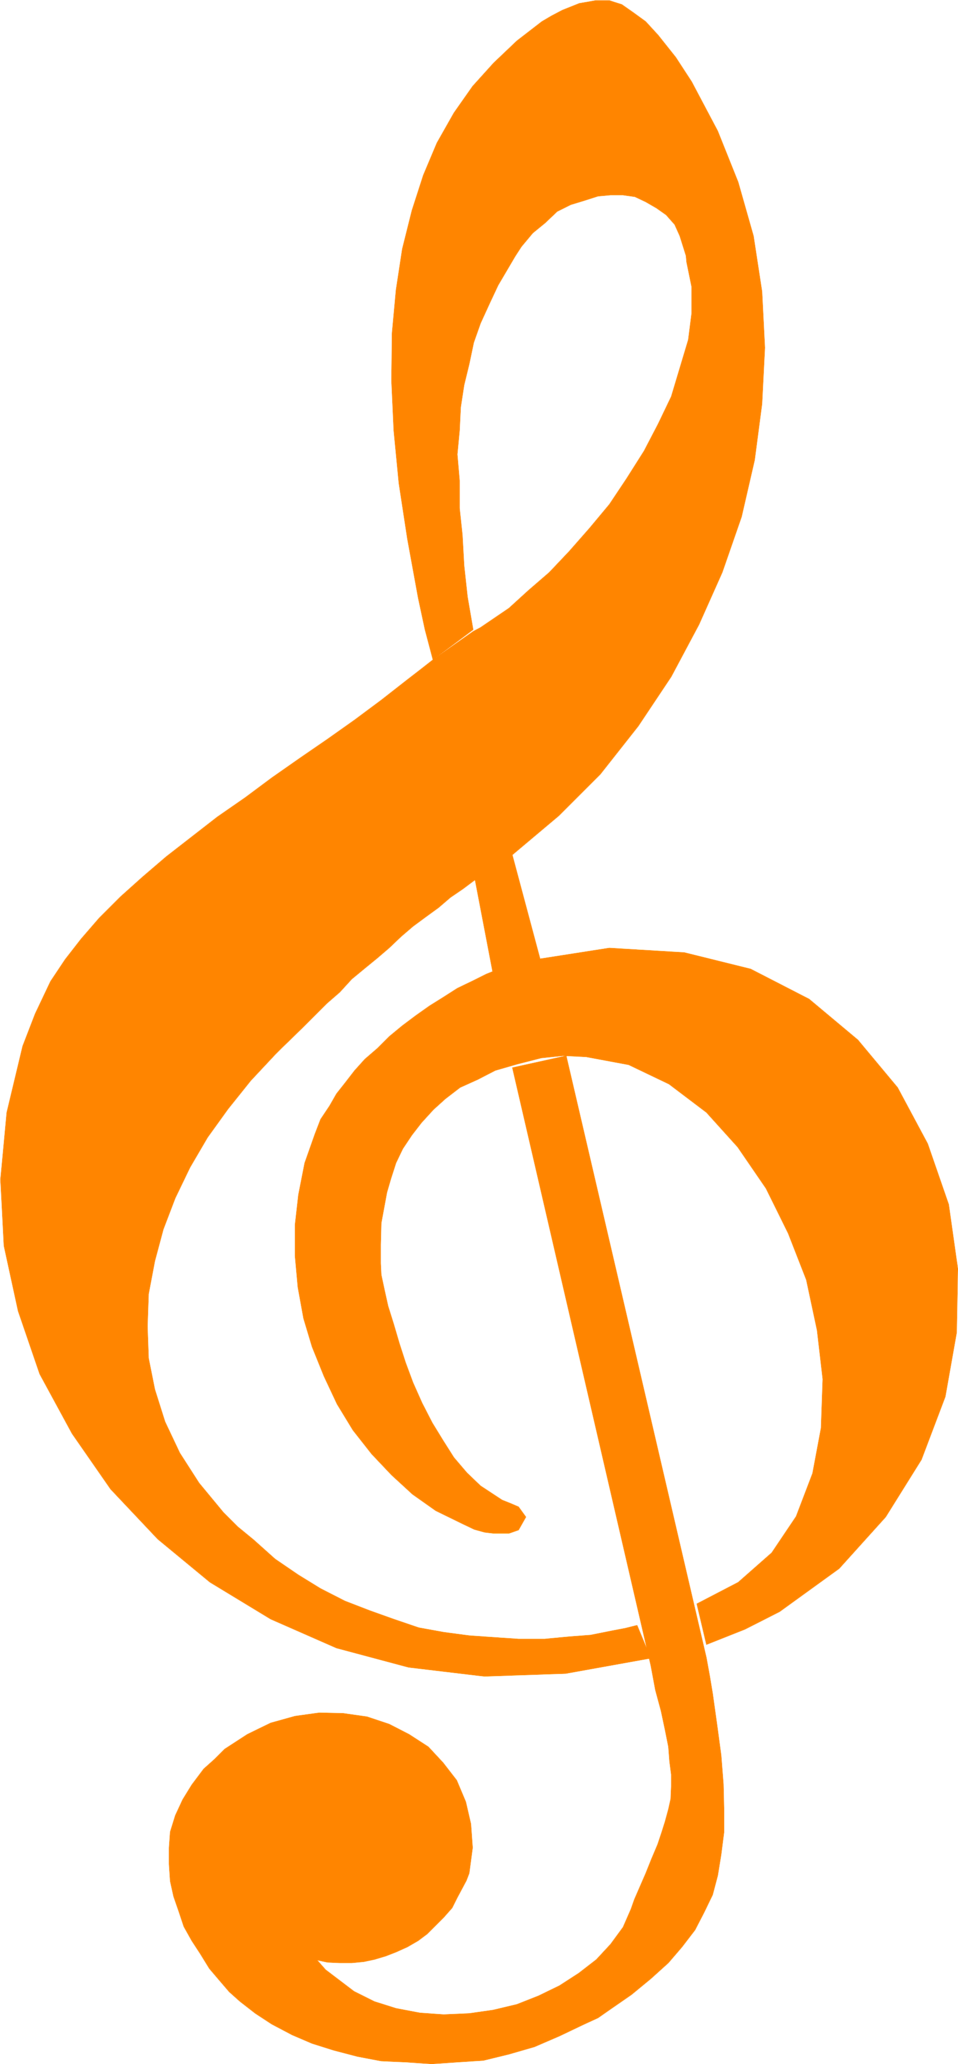 Illustration Of An Orange Treble Clef Music Symbol